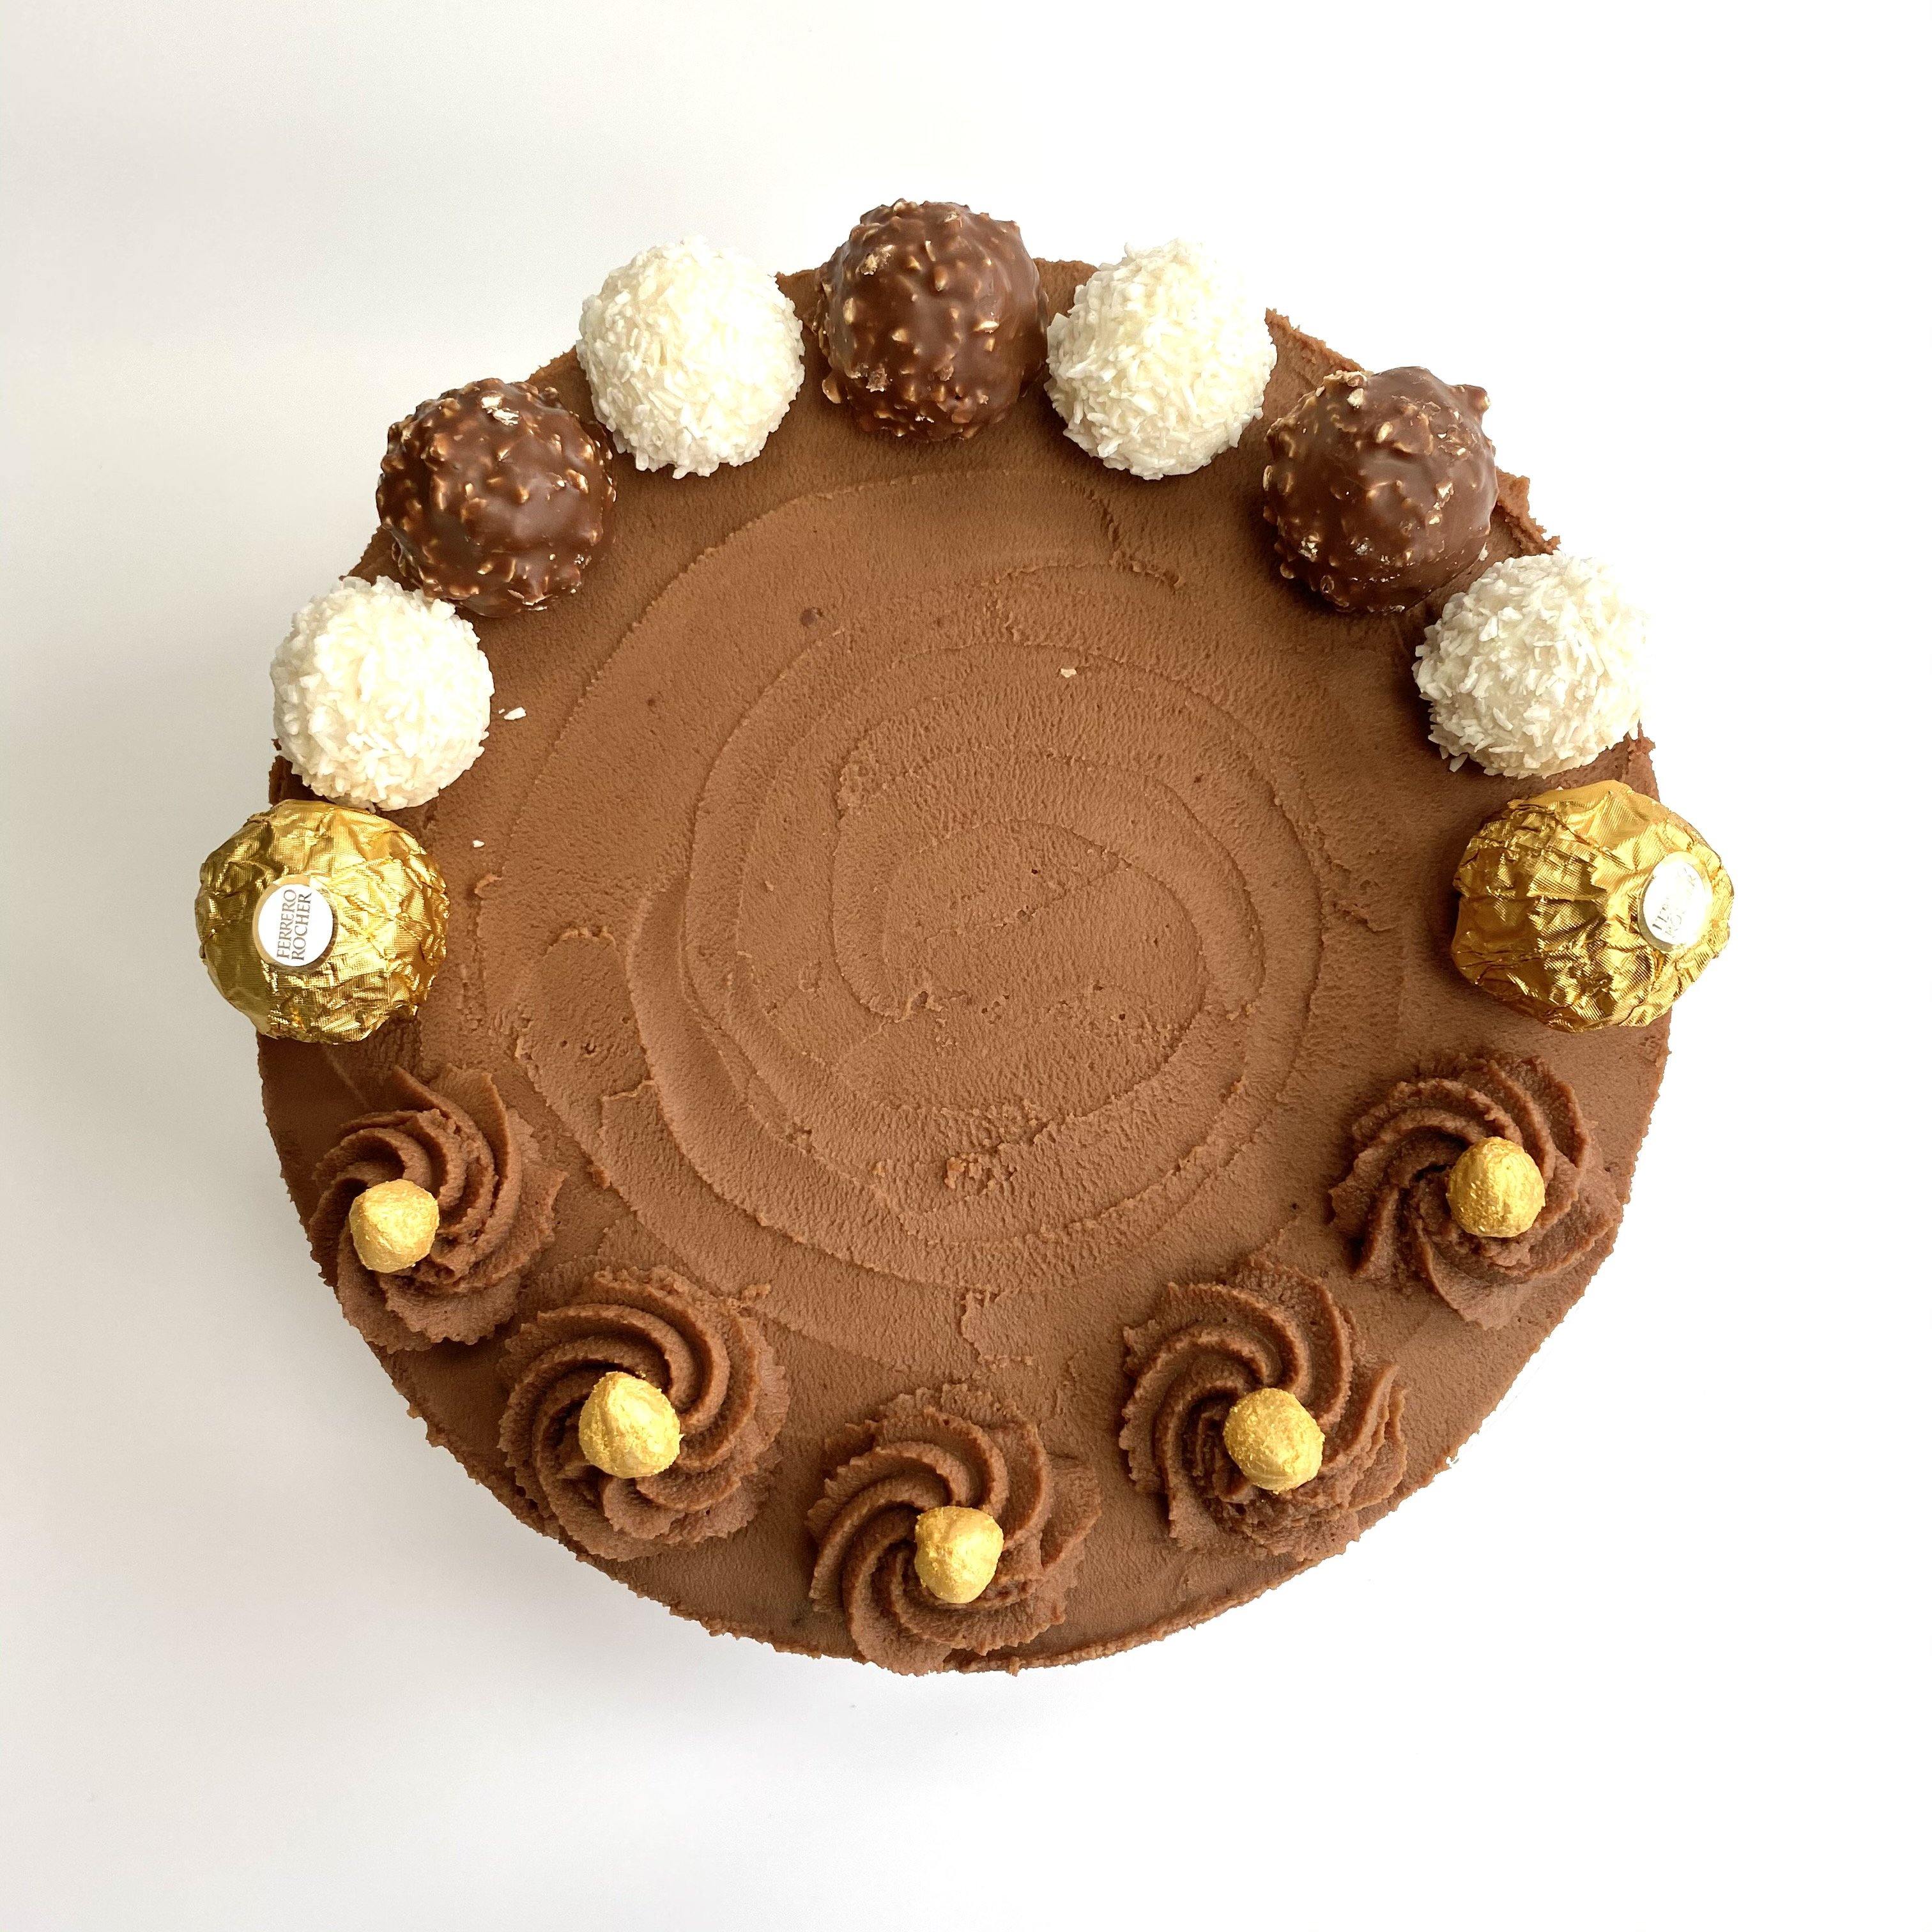 Nutella Chocolate cake - Yasmin Bakery & Cartering